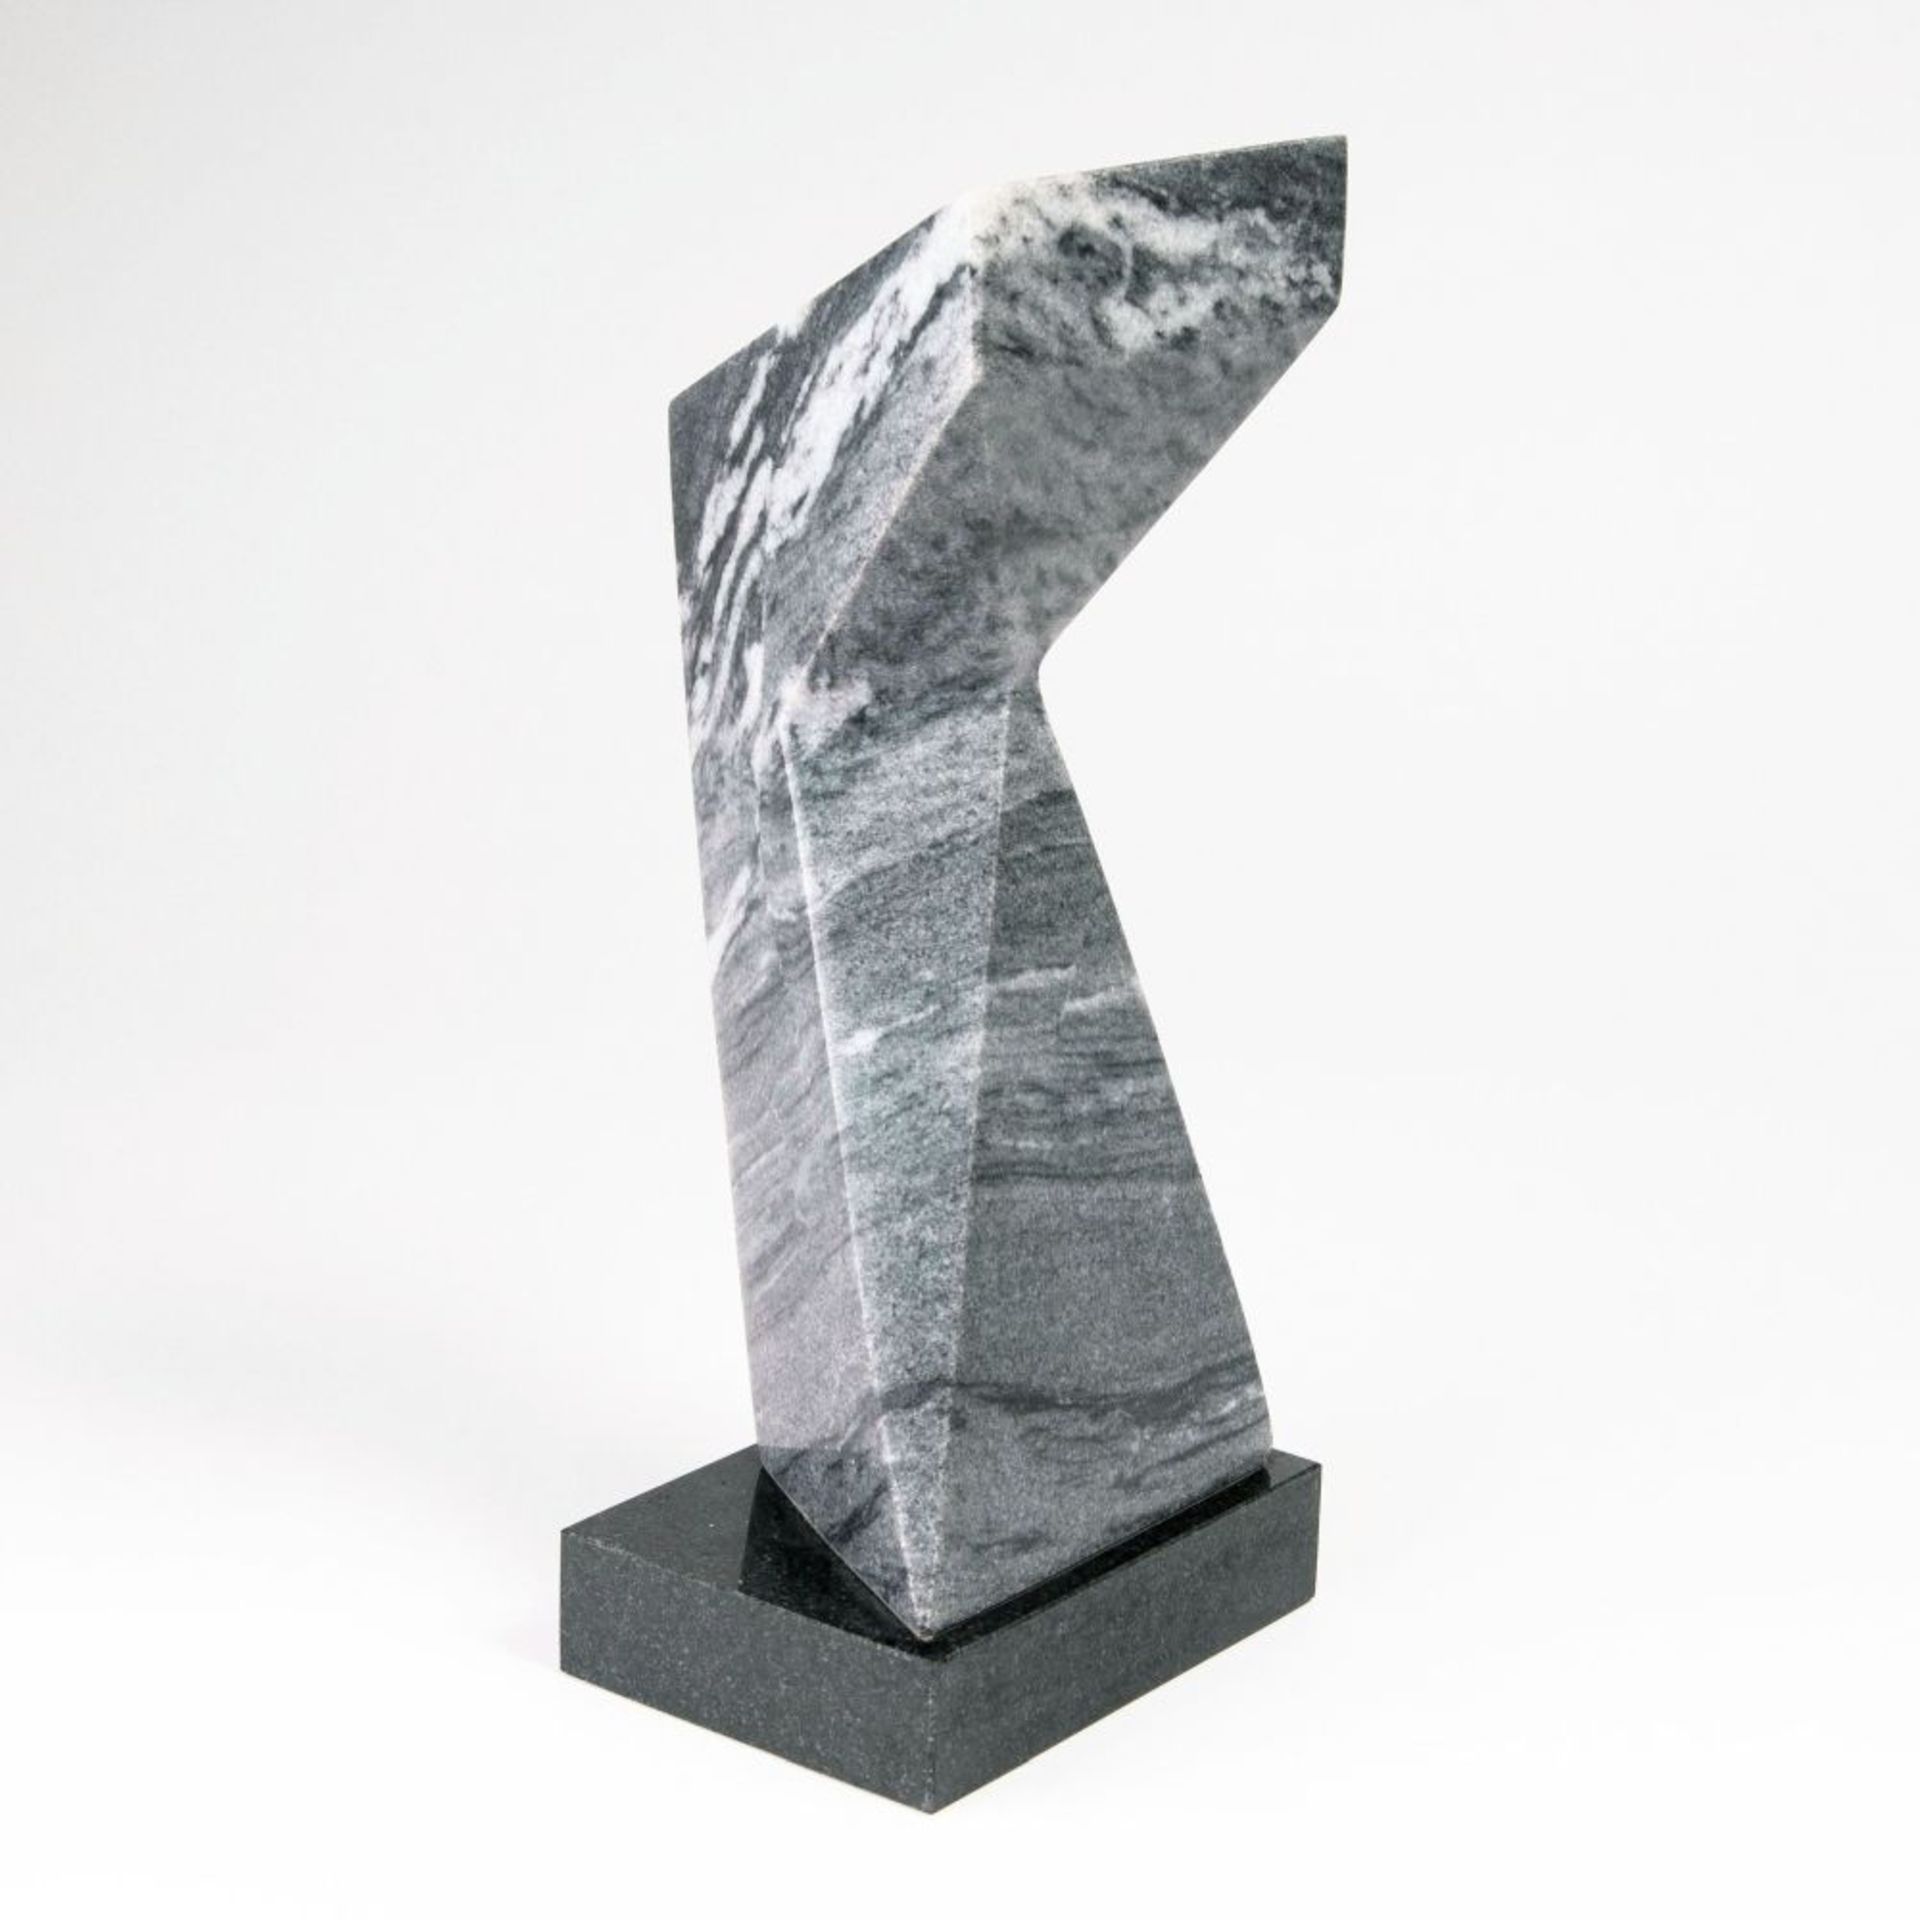 Beck, Wolfram (Greiz 1930 - Berlin 2004). Stone work 'Untitled'. - Image 2 of 2